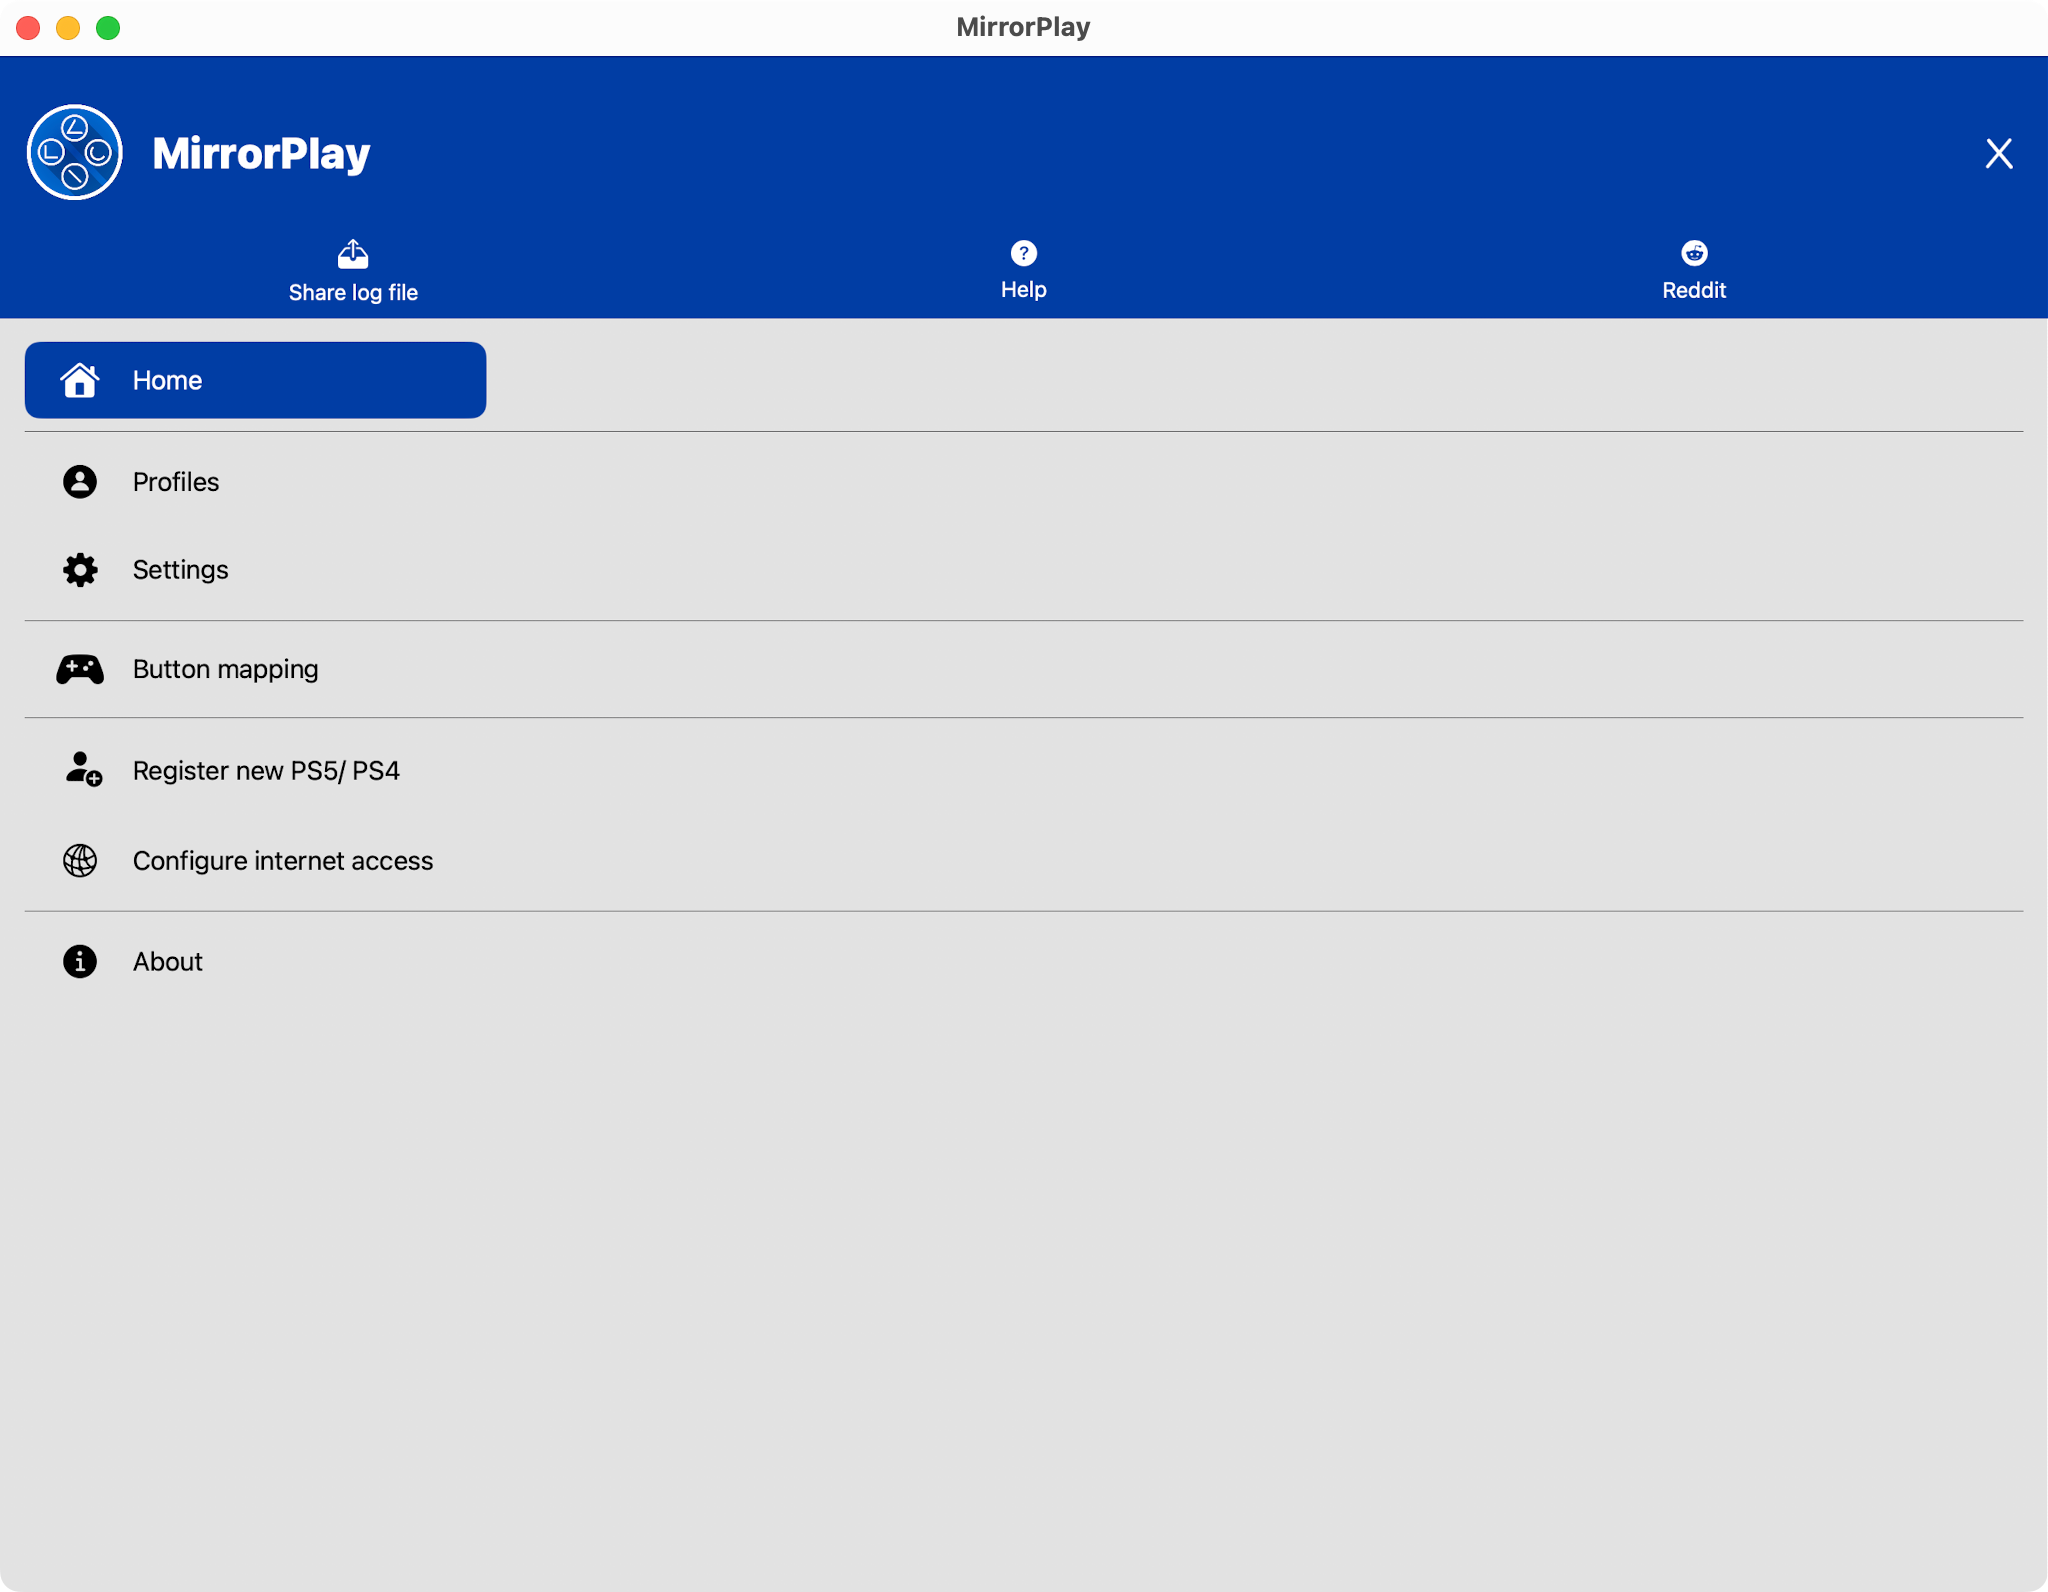 iPad version of MirrorPlay running on macOS.